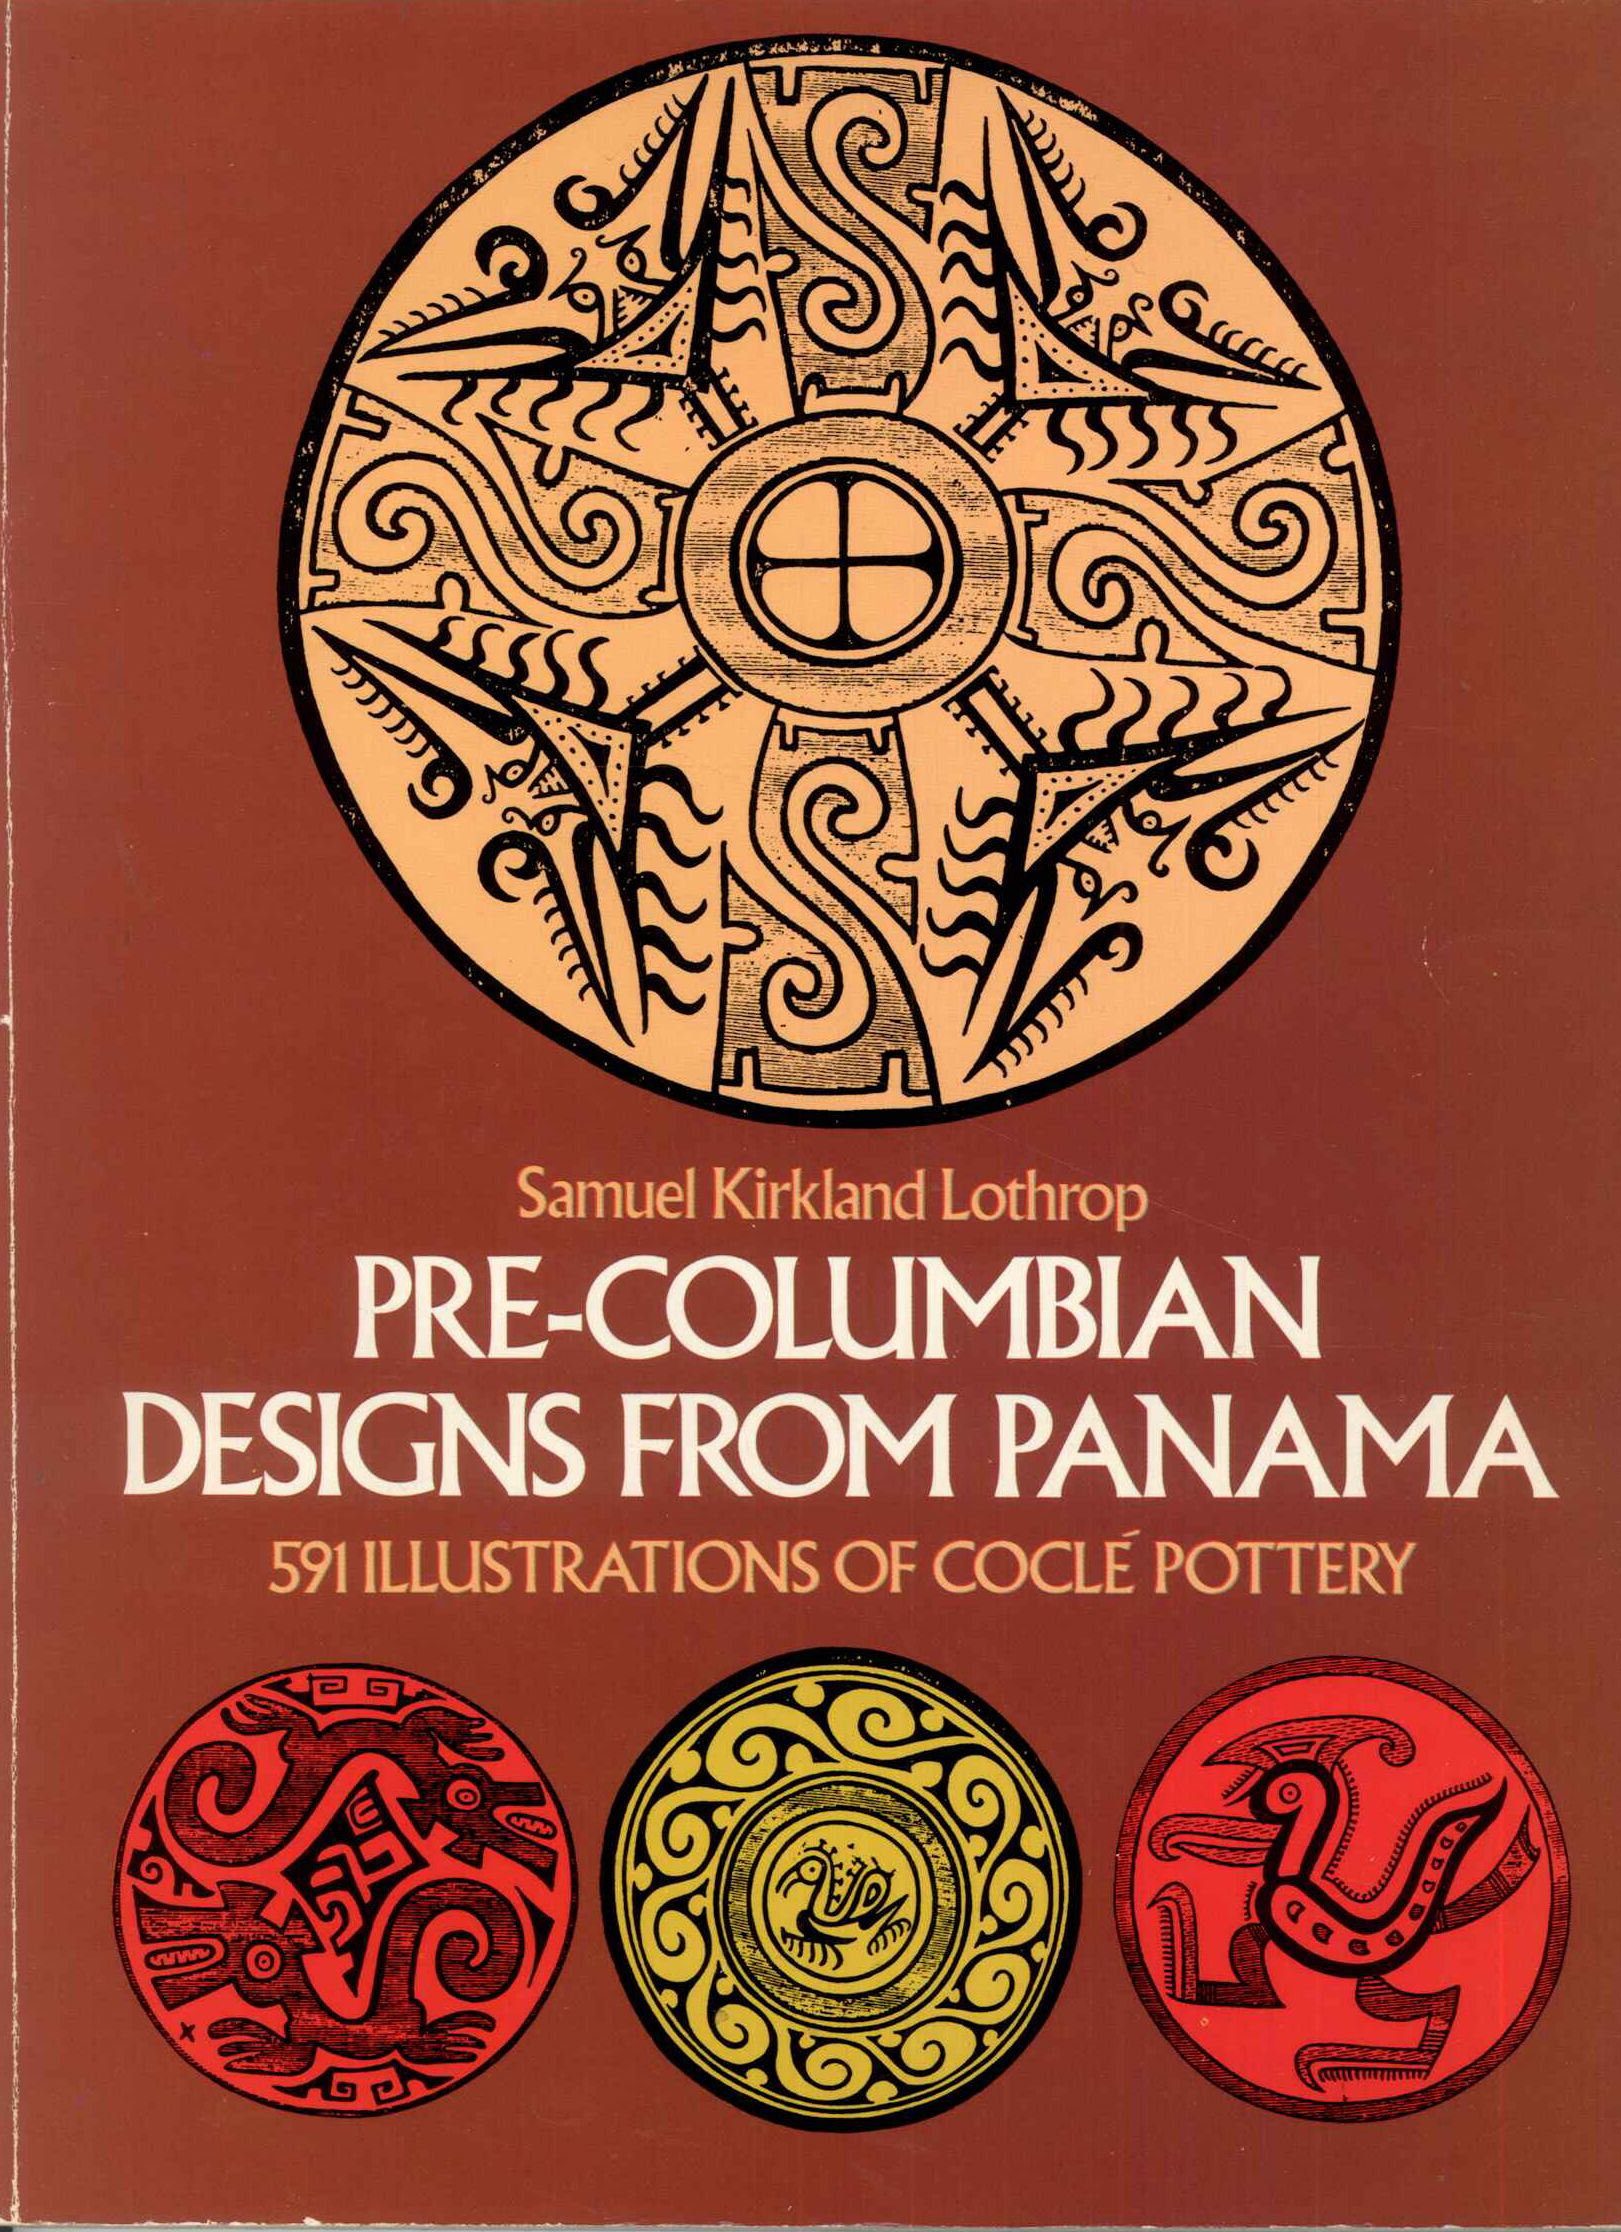 Pre-colimbian designs from panama